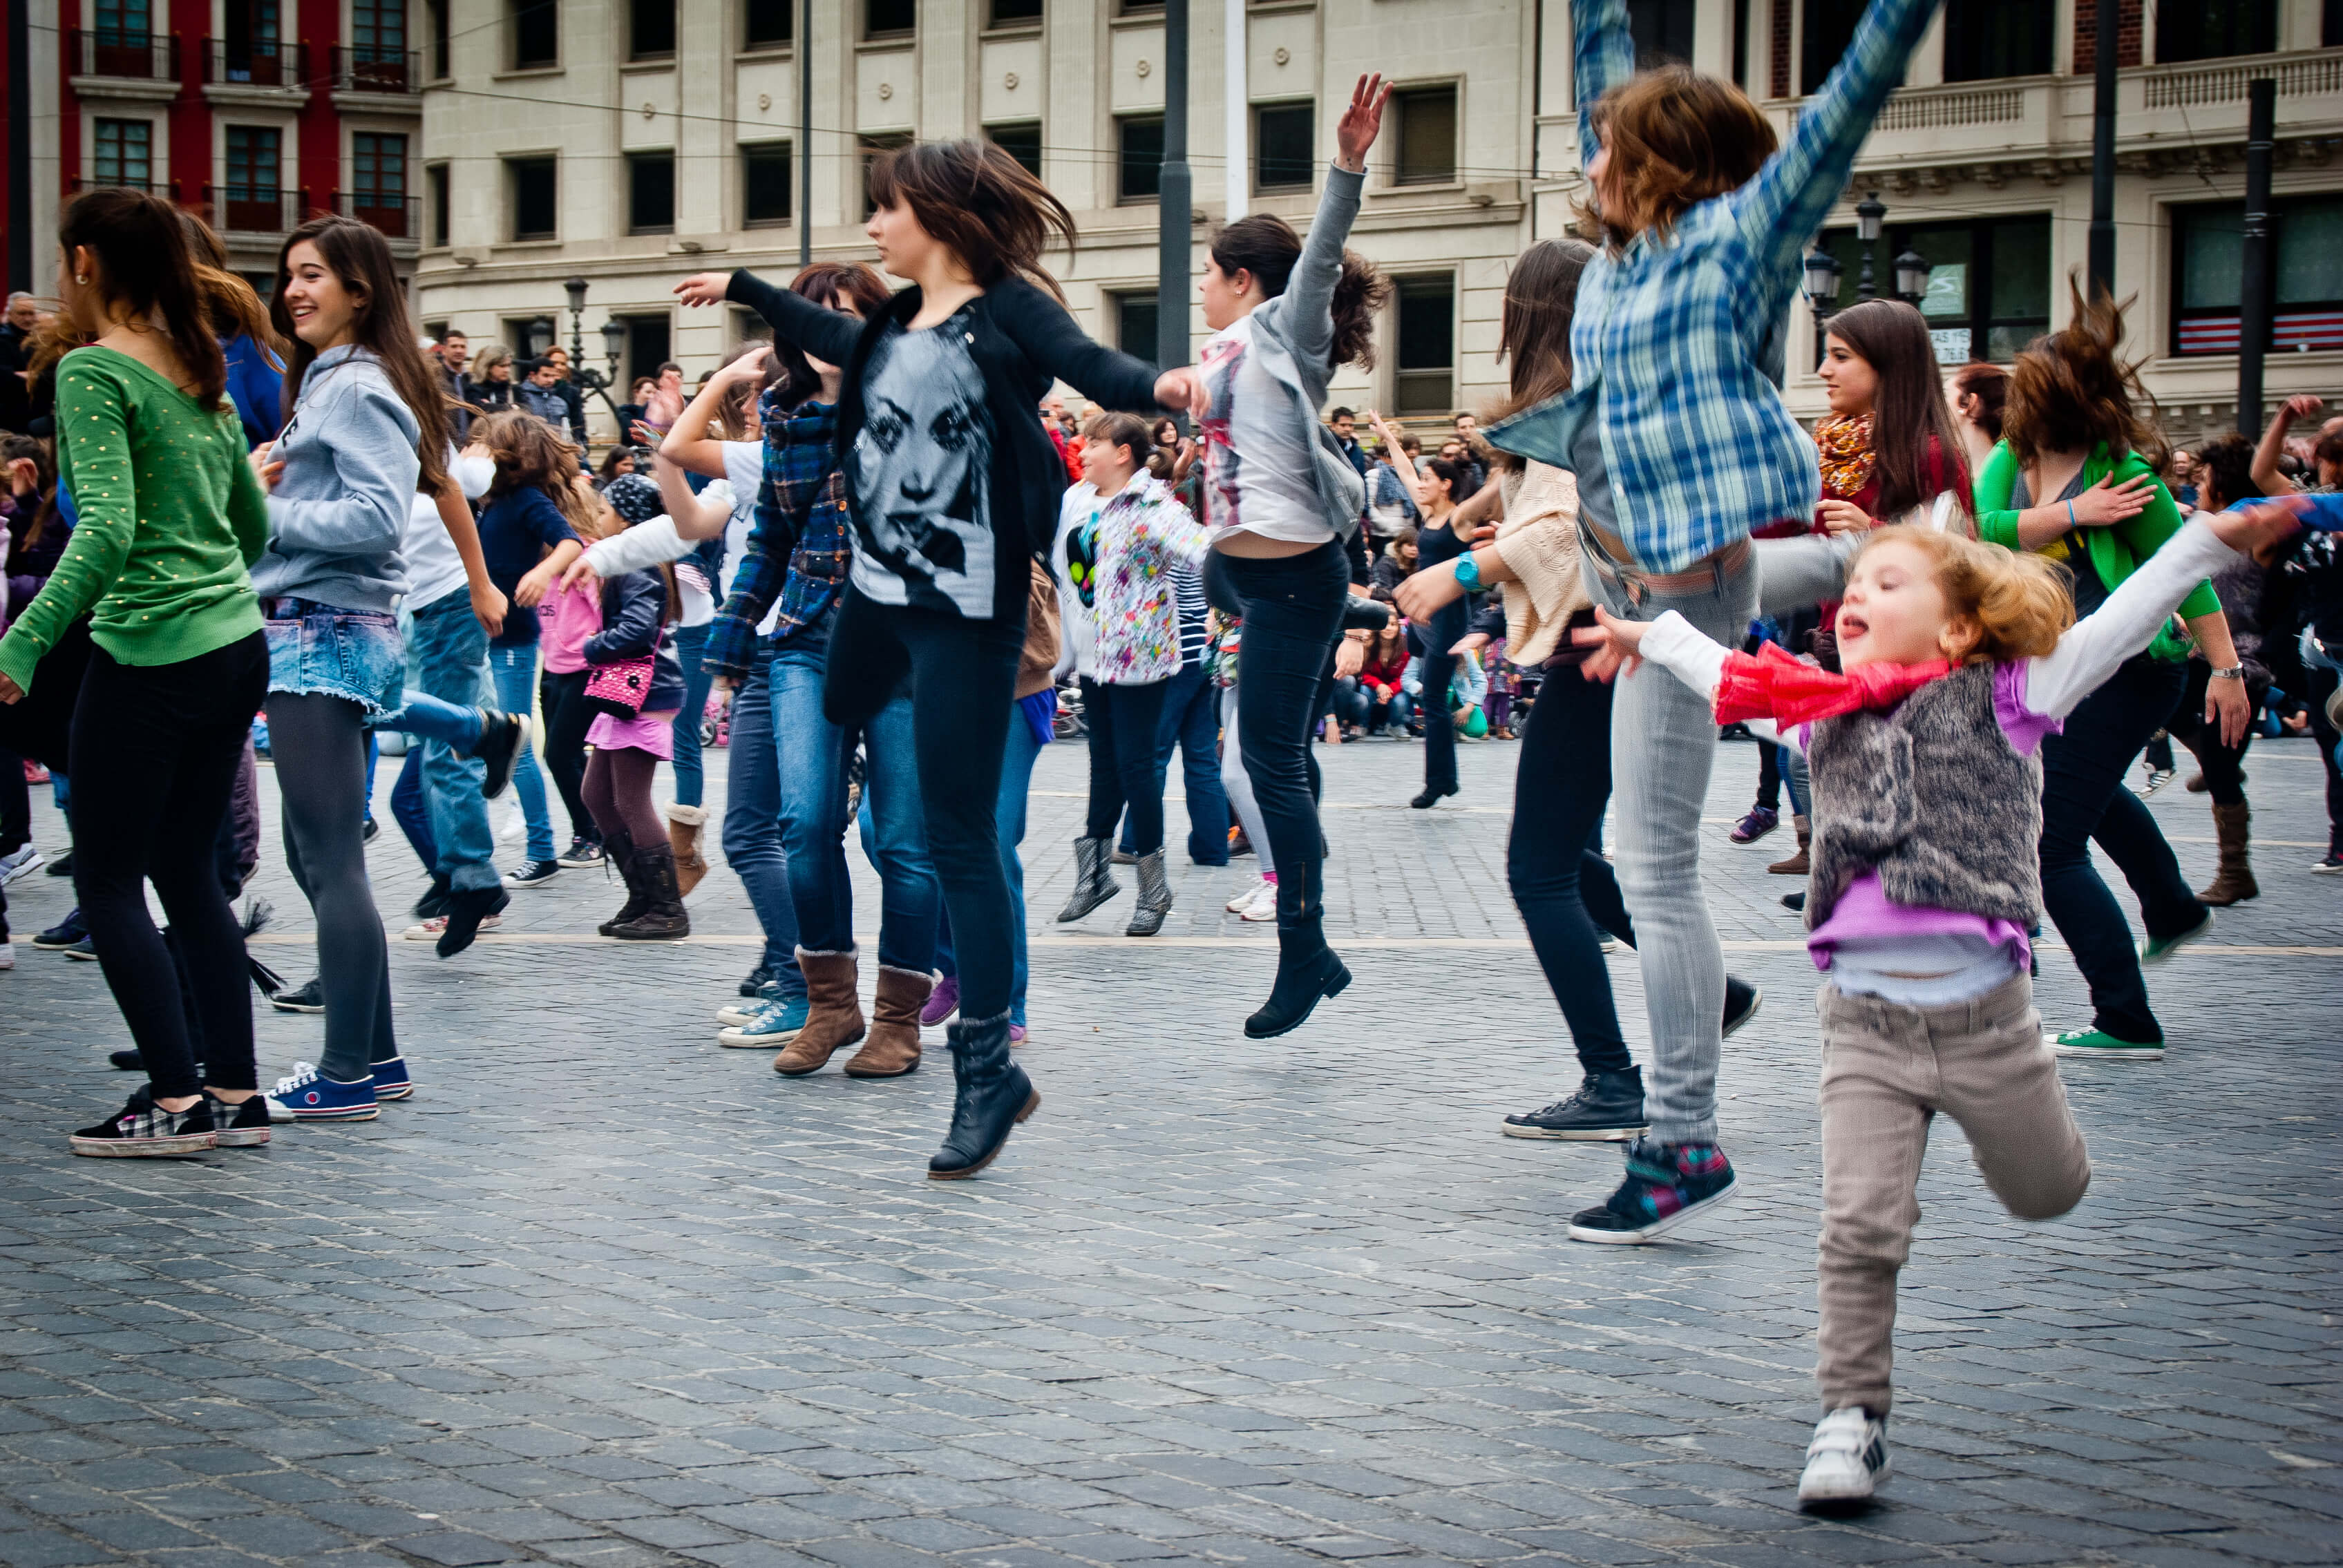 Танцы много людей. Танцы на улице. Флэшмоб. Массовые танцы на улице. Люди танцуют.